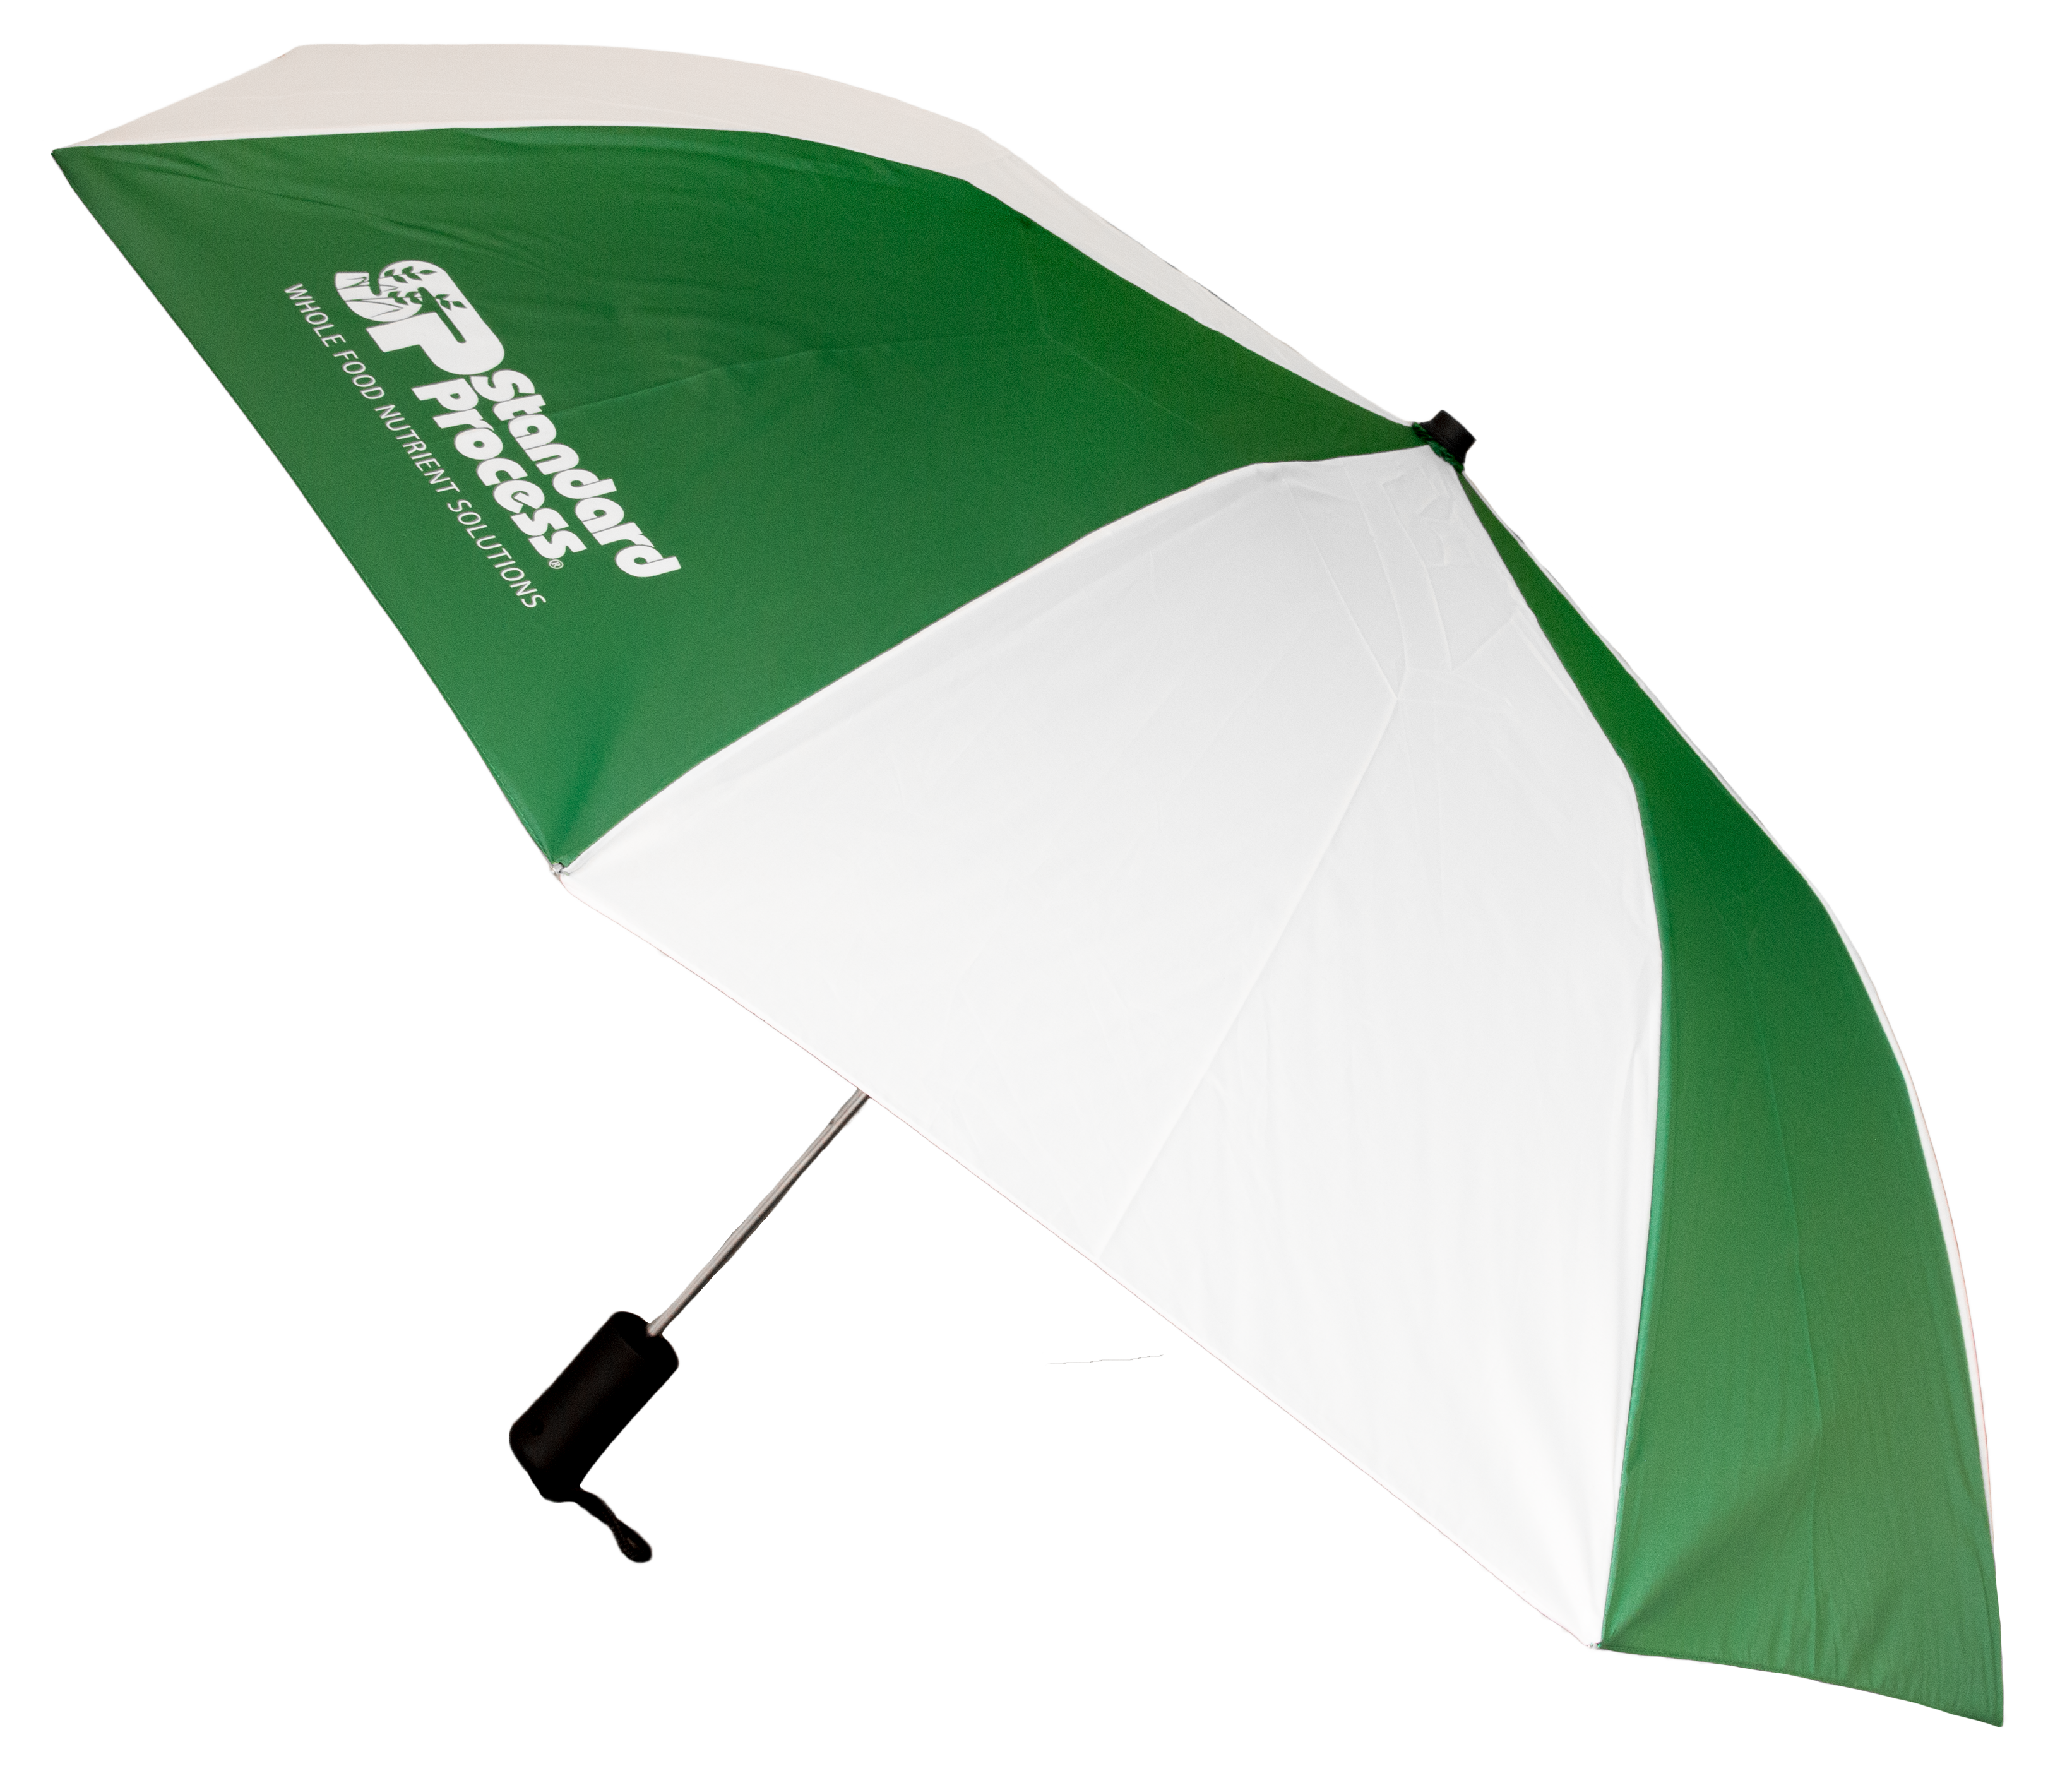 umbrella company glider11+secpp.com.br